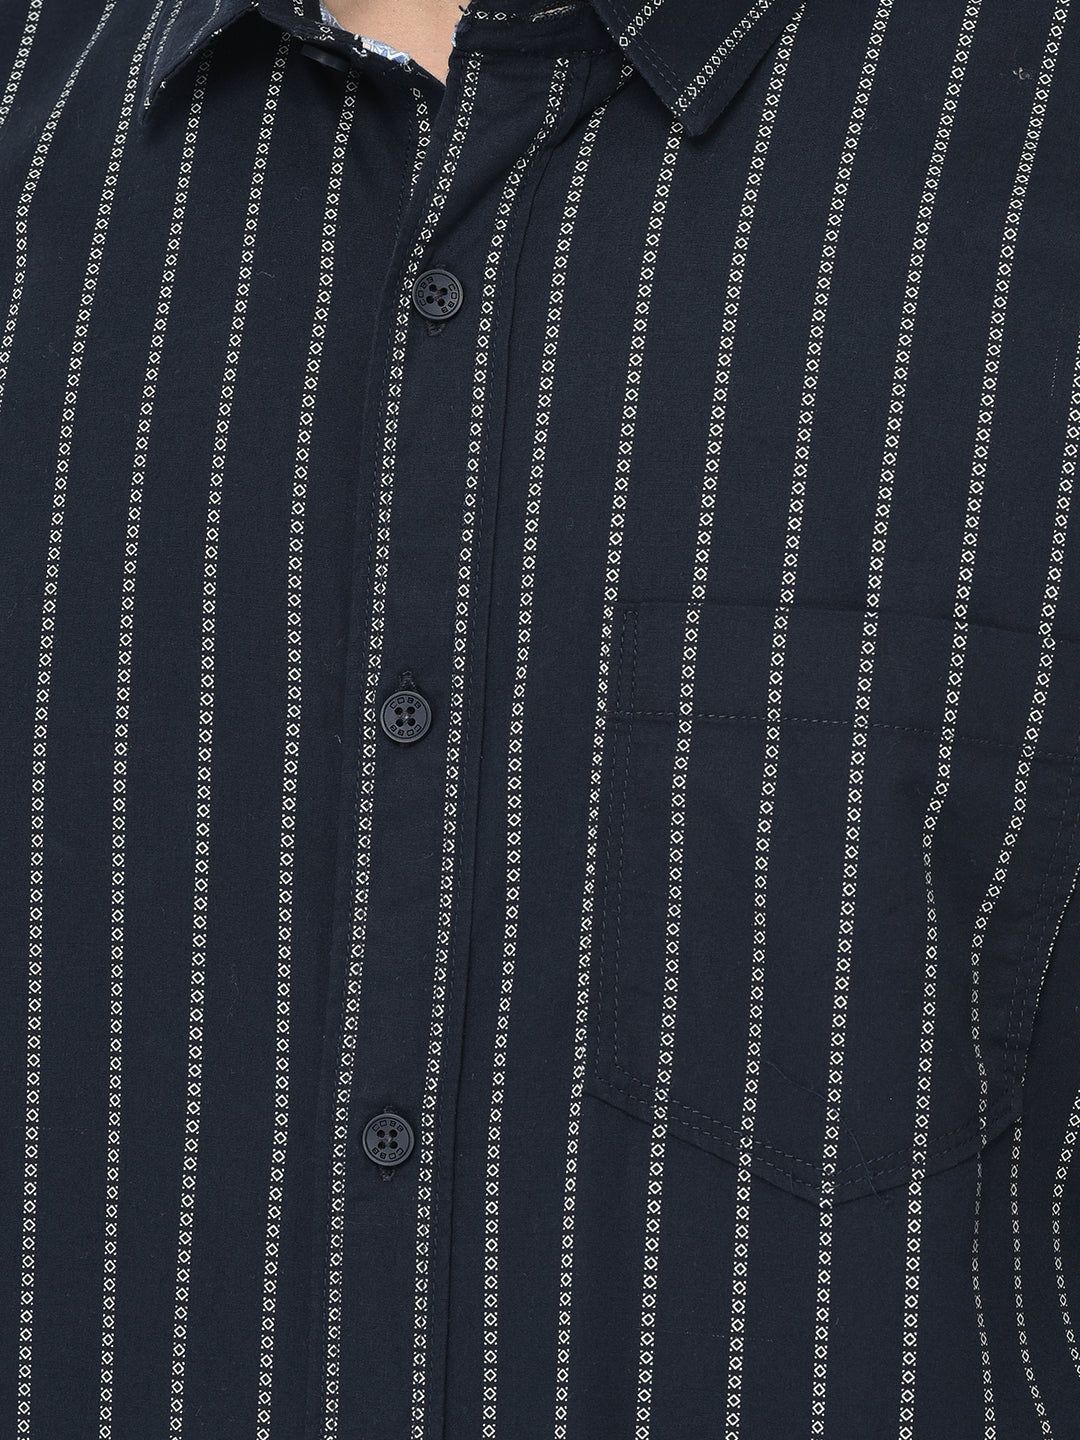 Cobb Navy Blue Striped Slim Fit Casual Shirt